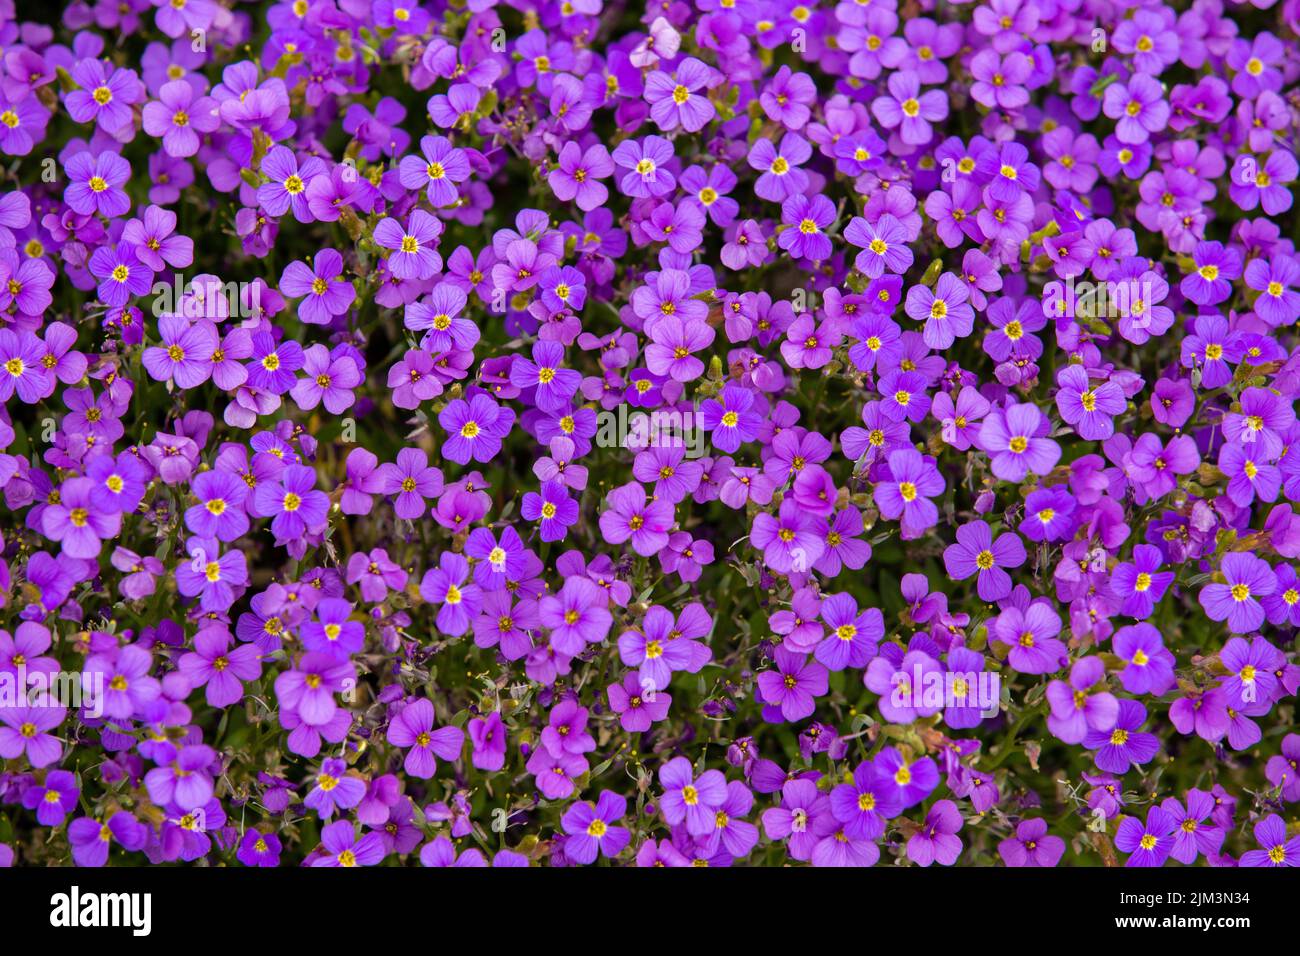 A wallpaper with Aubrieta flowers in closeup, wall, viola, purple Stock Photo